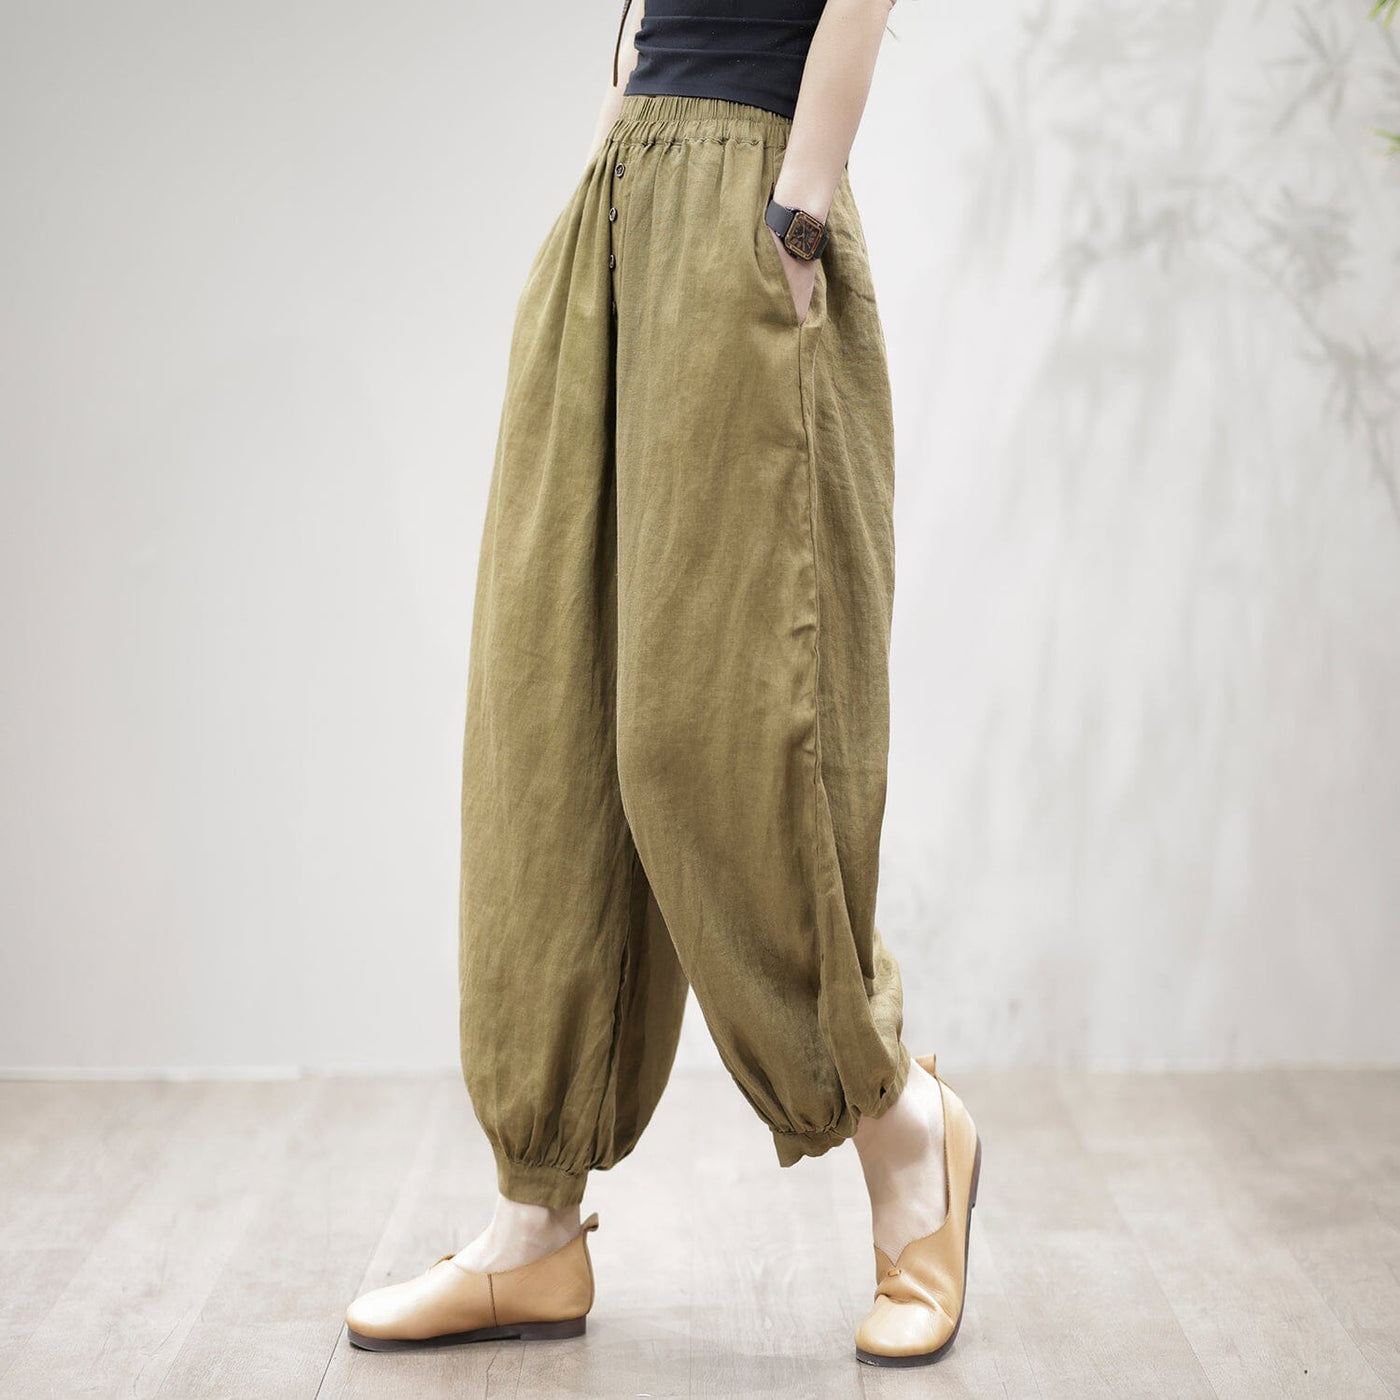 Spring Linen Loose Solid Harem Pants for Women Feb 2023 New Arrival 